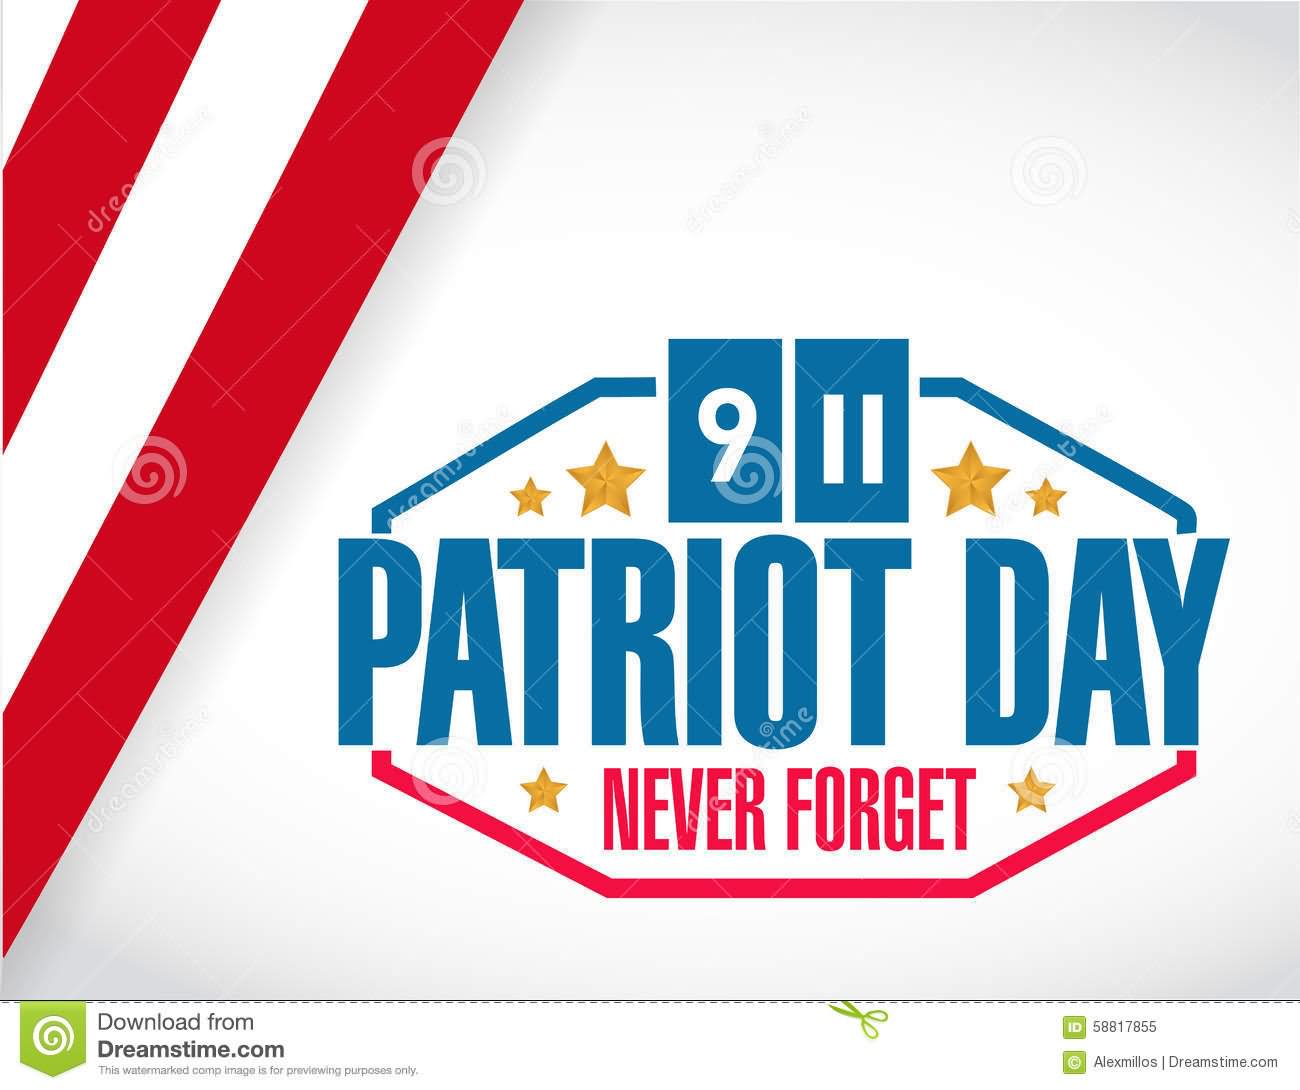 9-11 Patriot Day Never Forget Illustration